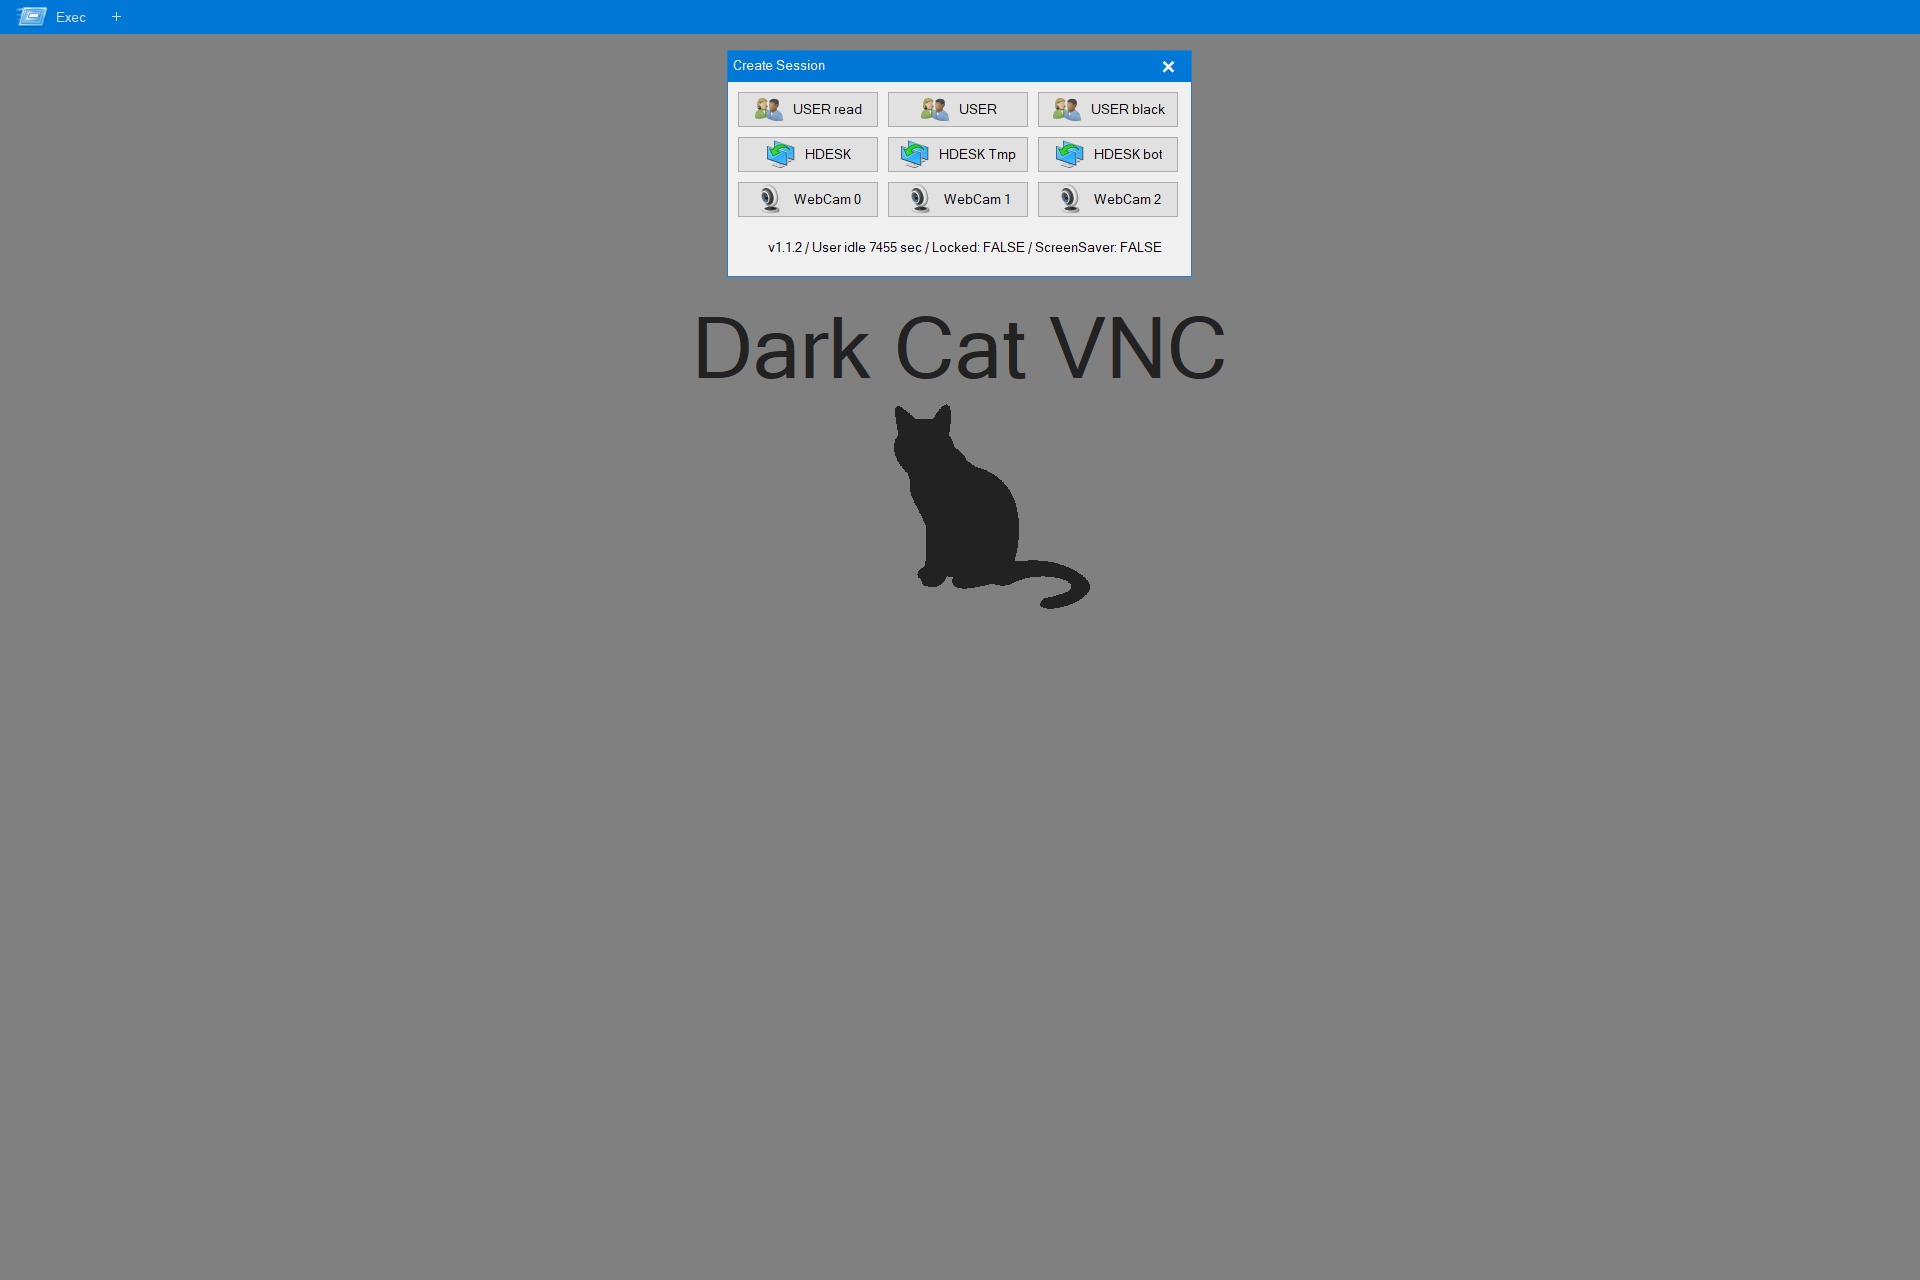 The Dark Cat VNC interface.